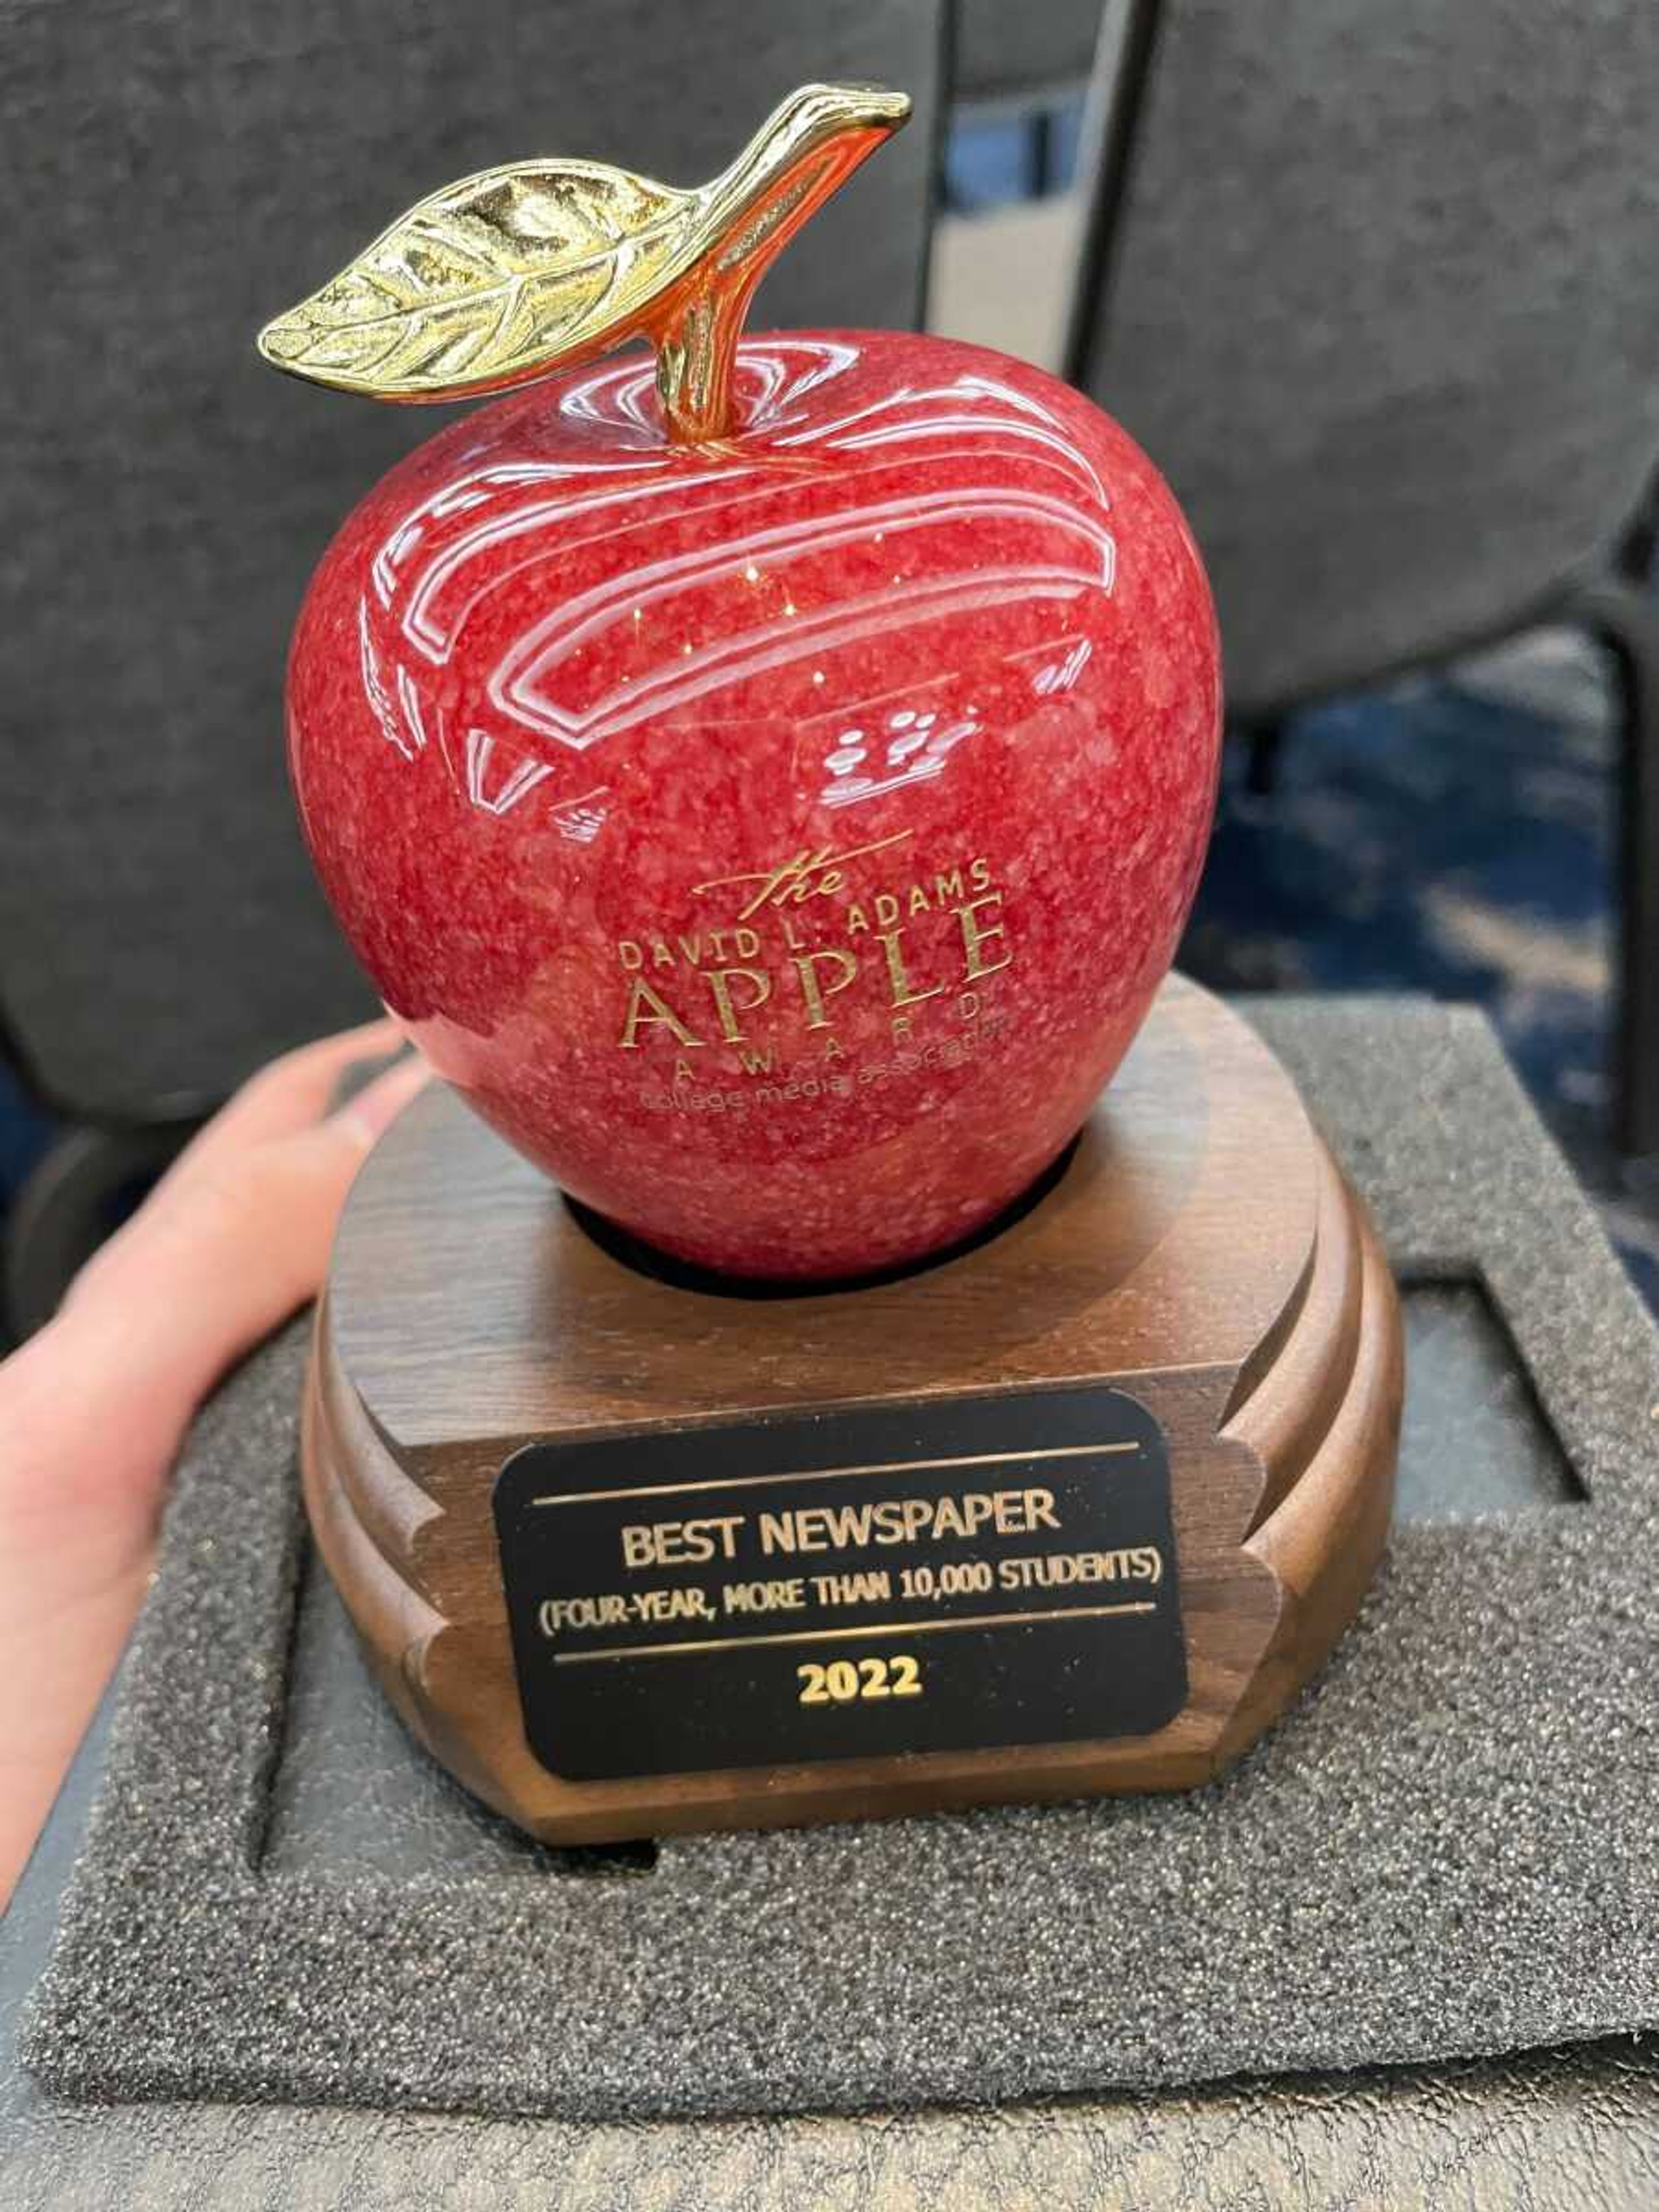 Arrow wins Best Newspaper in national contest